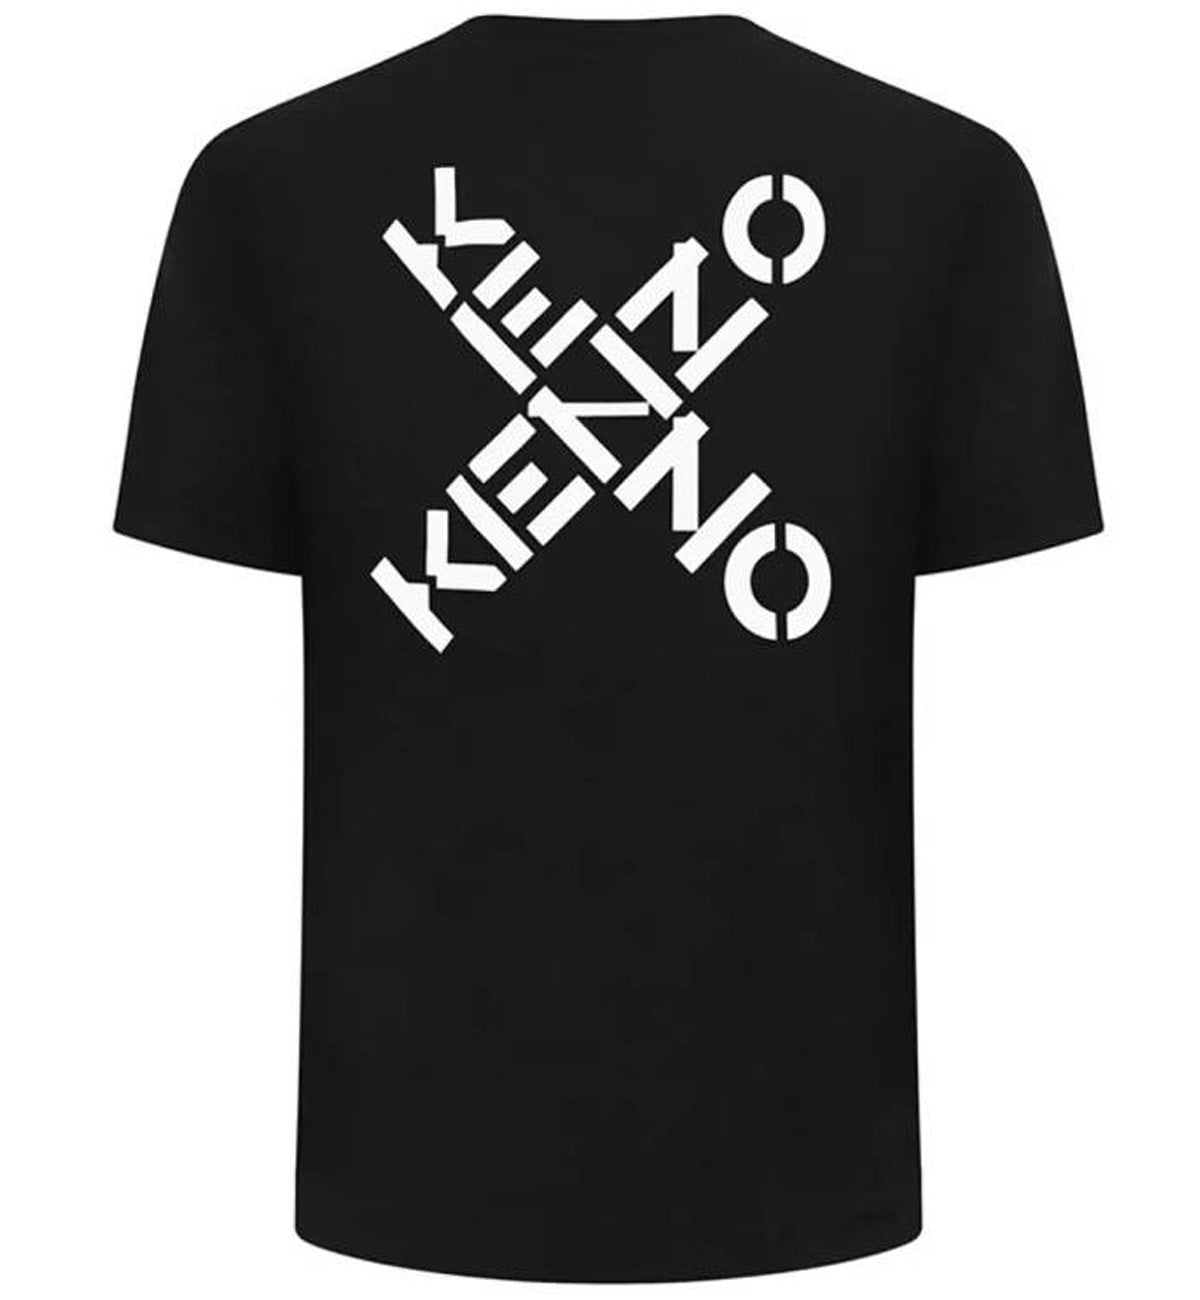 Kenzo Double Crossed Logo T-Shirt (New Design)